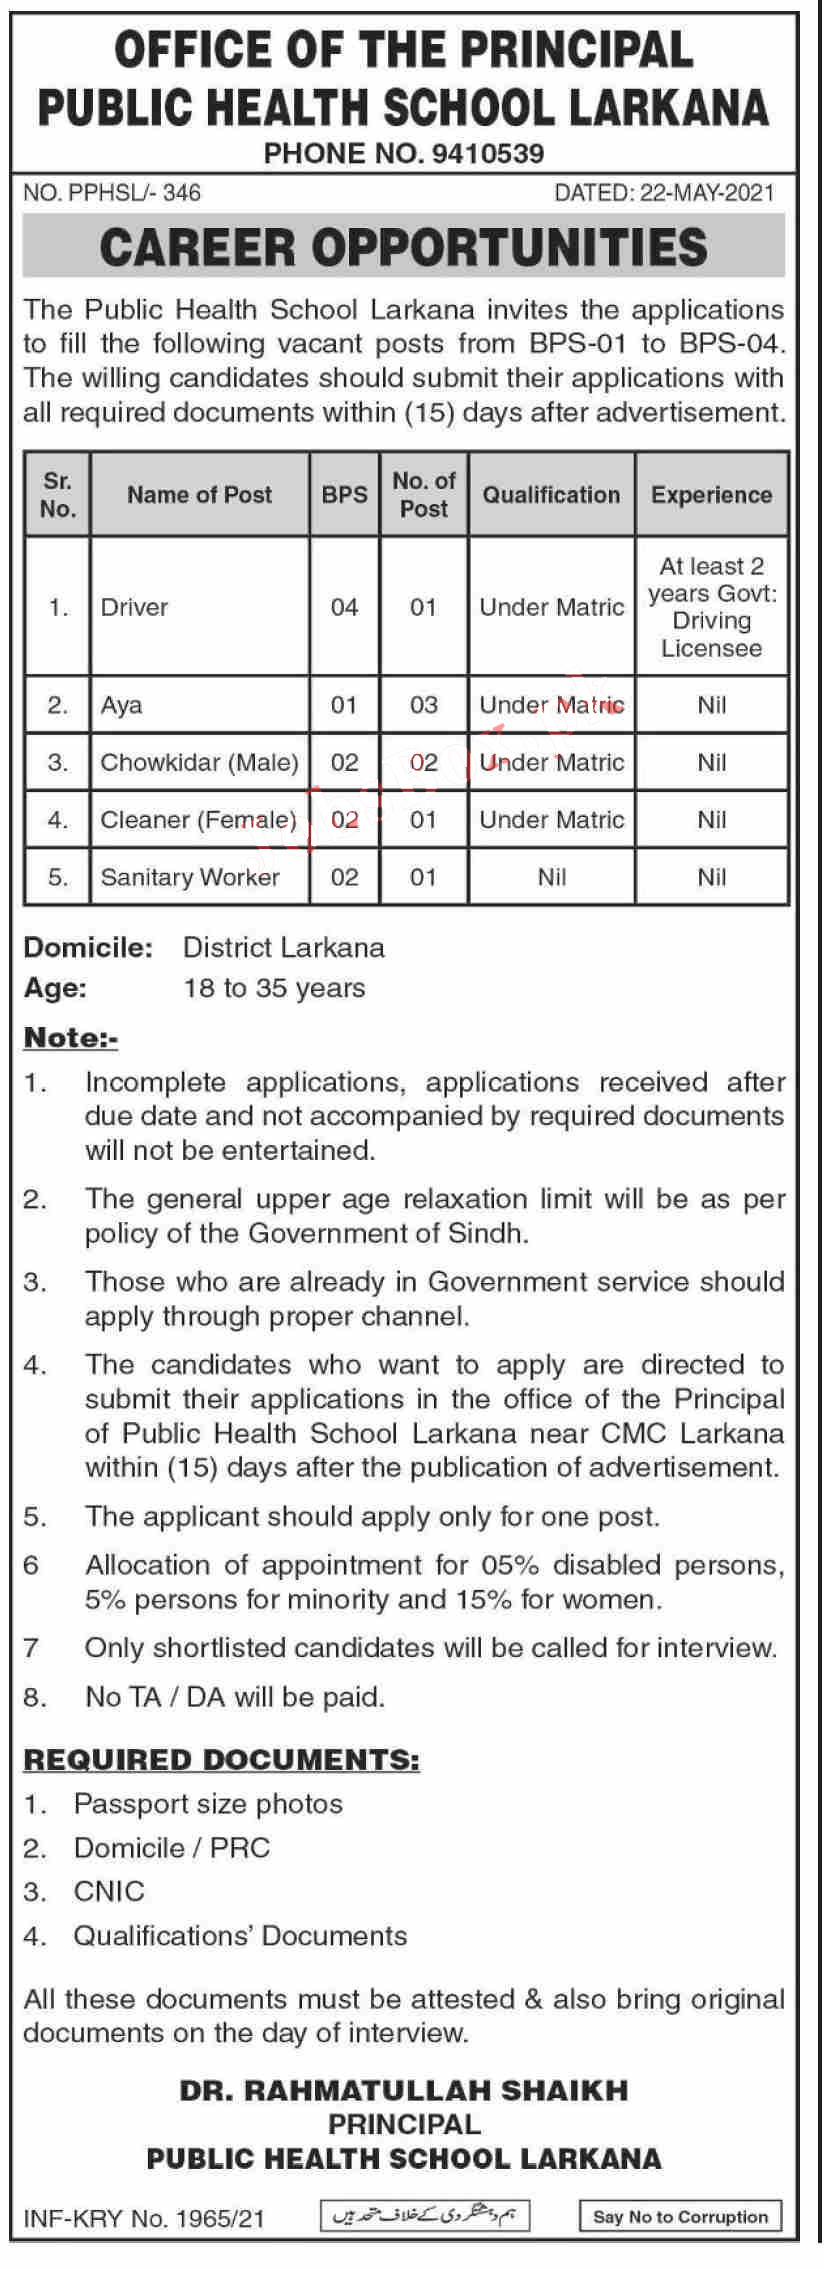 Education Department Jobs 2021 All Advertisements - Sindh education department jobs 2021